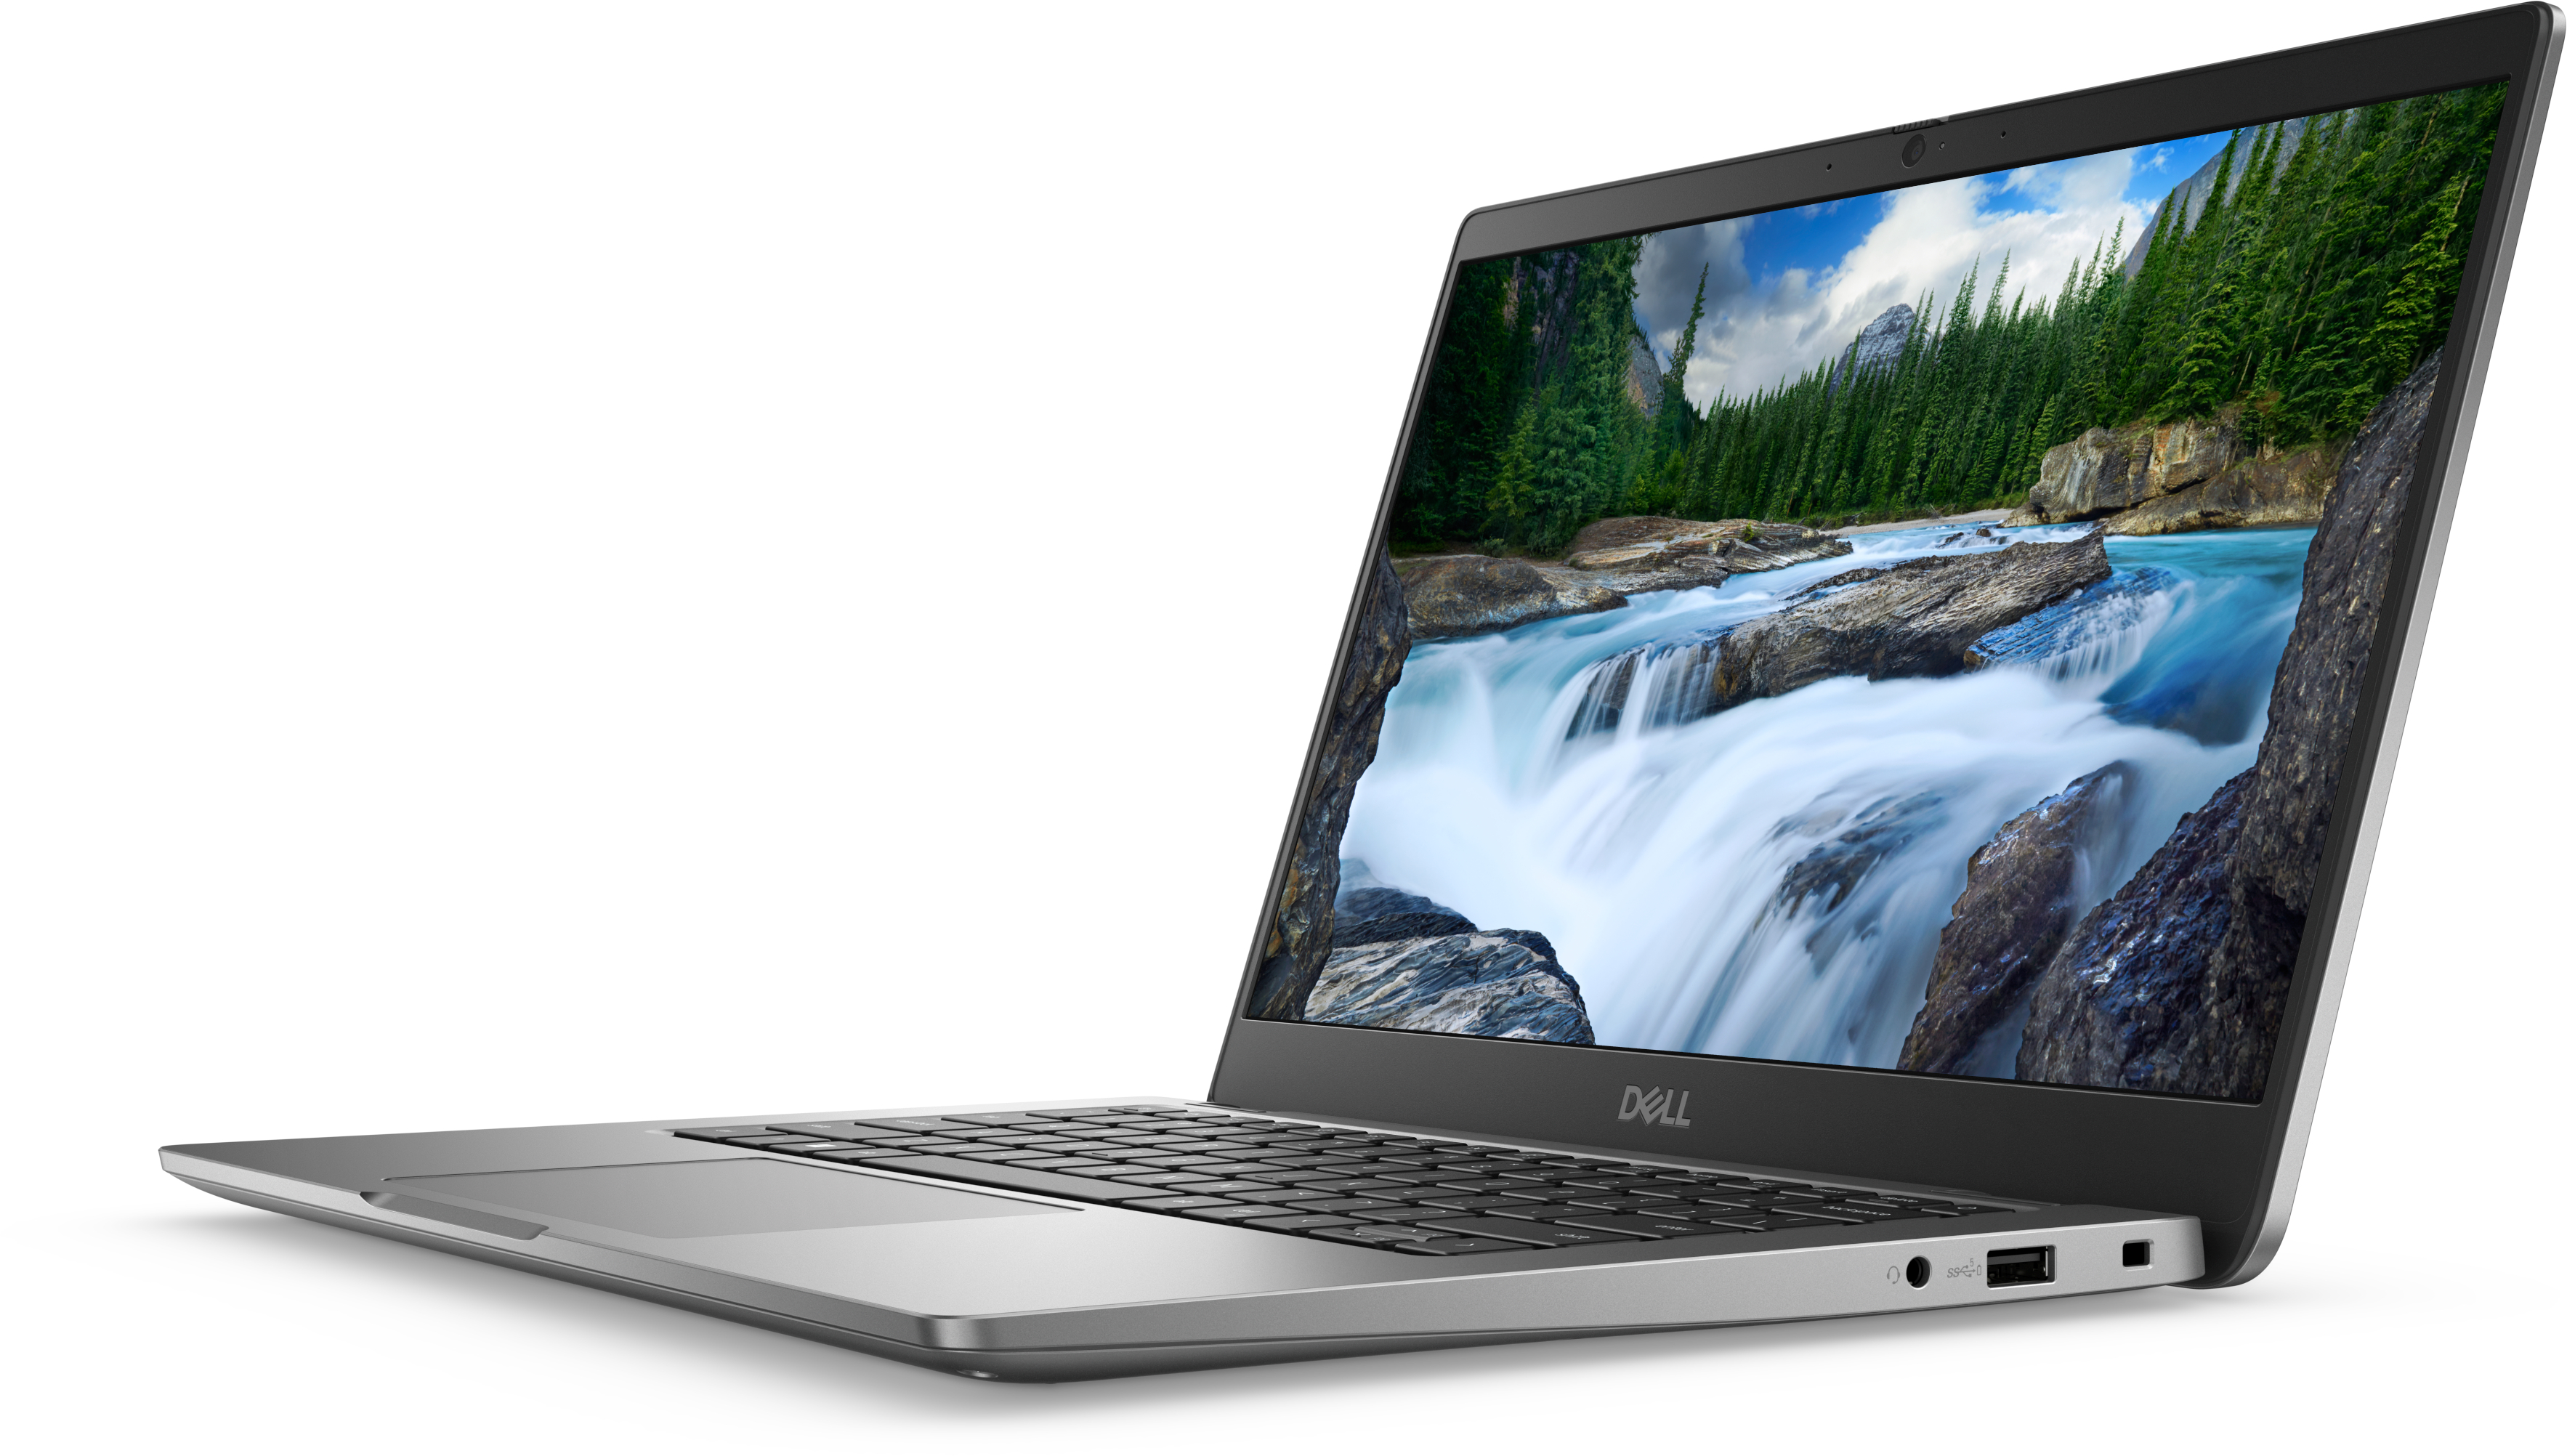 Dell Latitude 3340 Business Laptop - W/ 13th Gen Intel Core - 13.3 FHD Screen - 8GB - 512G